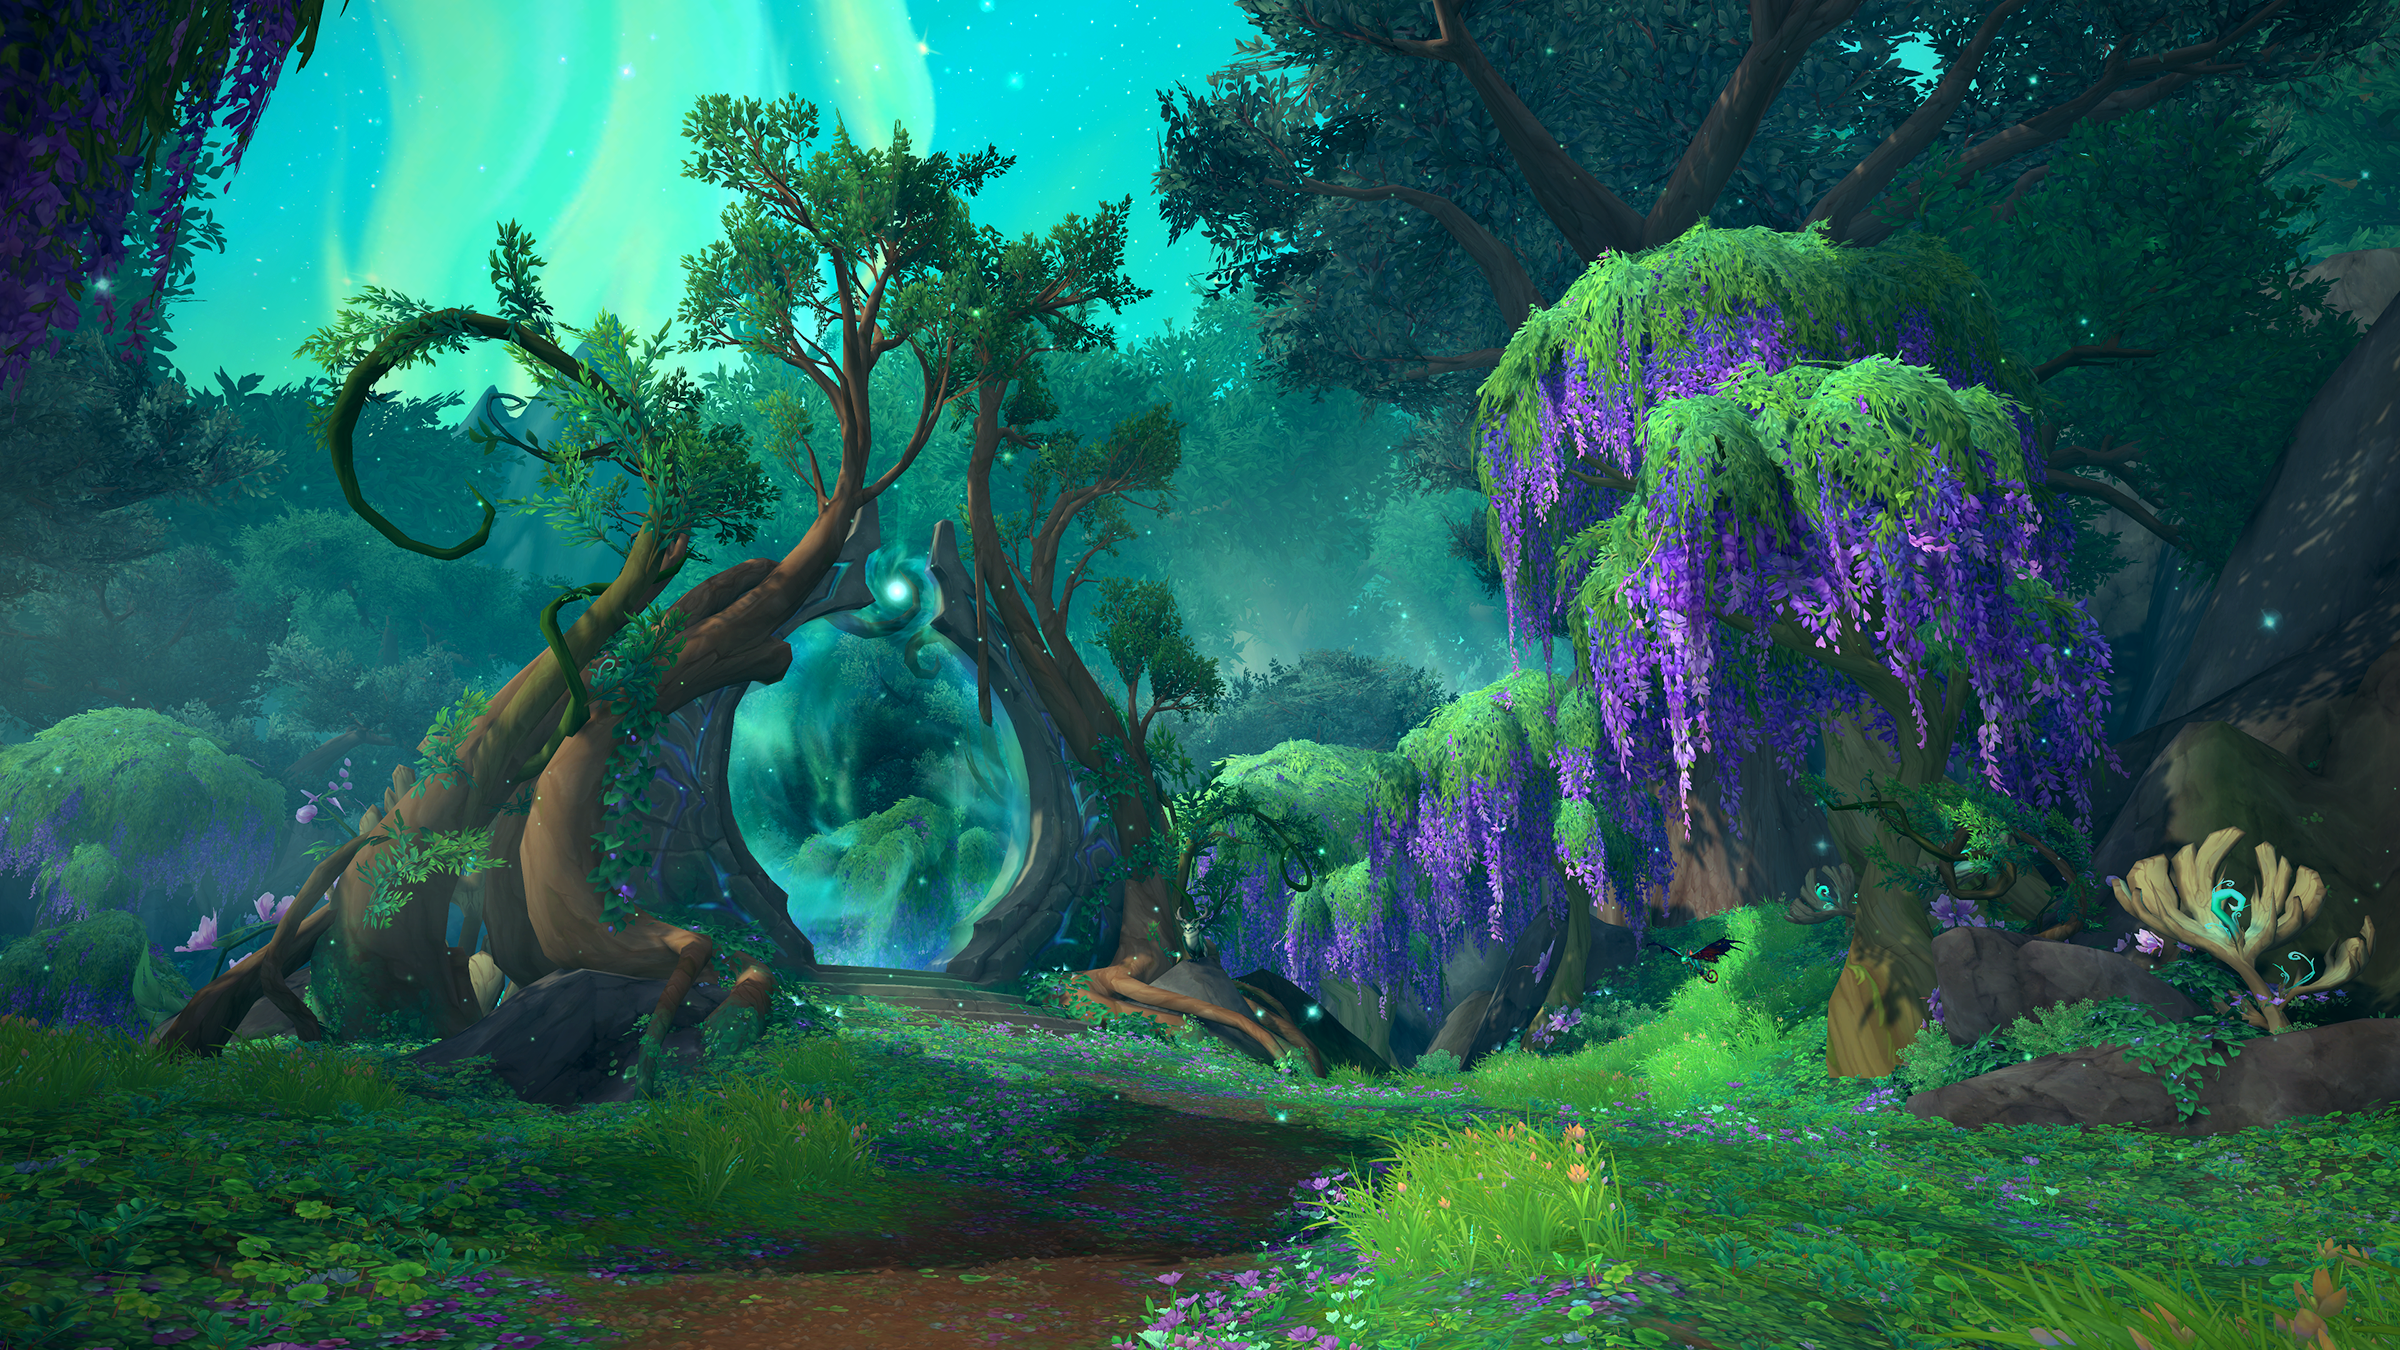 Zone Overview: Enter the Emerald Dream